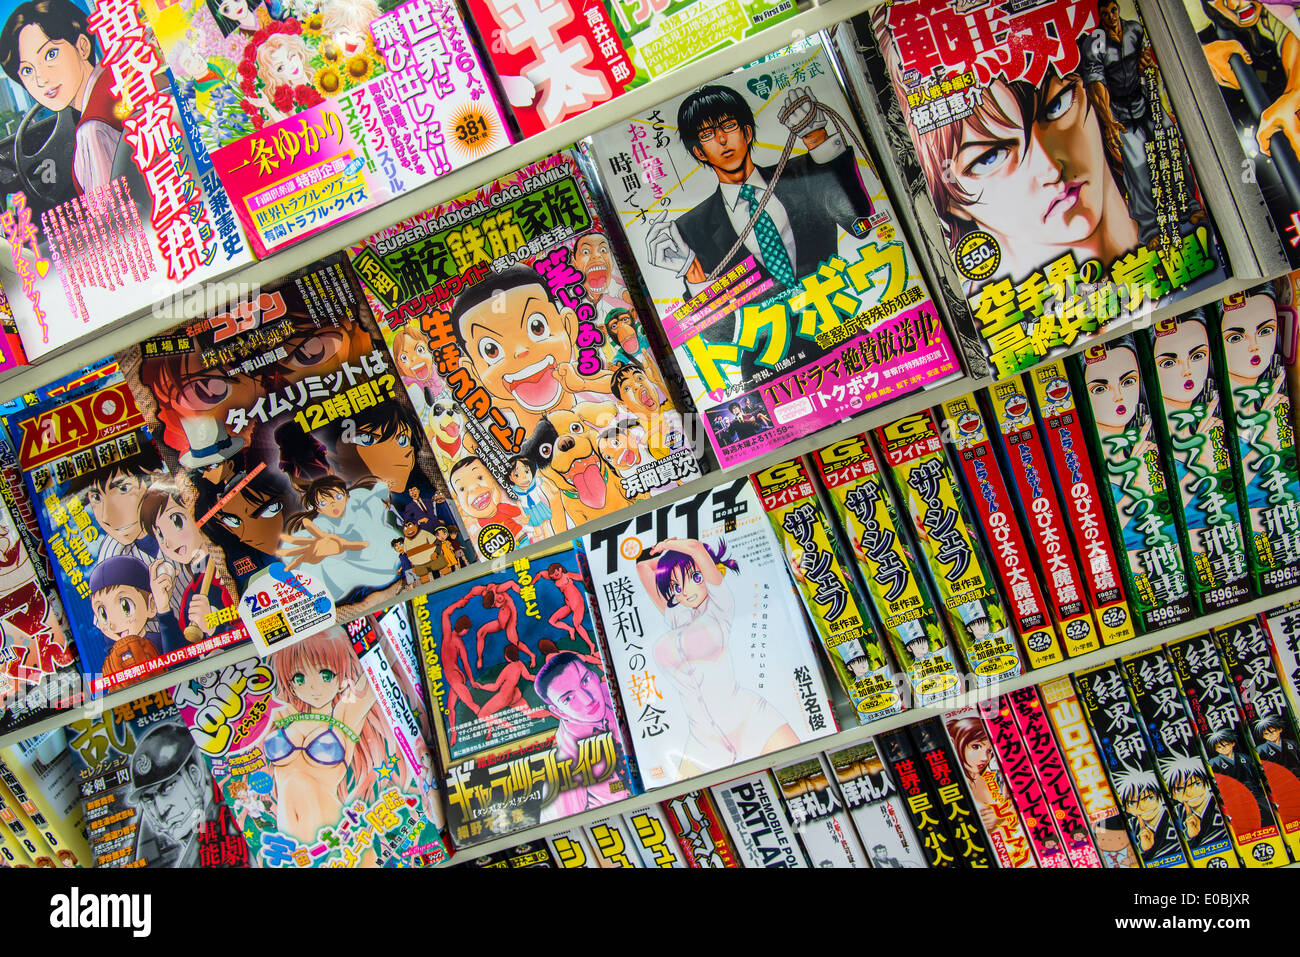 Manga comics magazines and publications at newsagent's, Tokyo, Japan Stock Photo